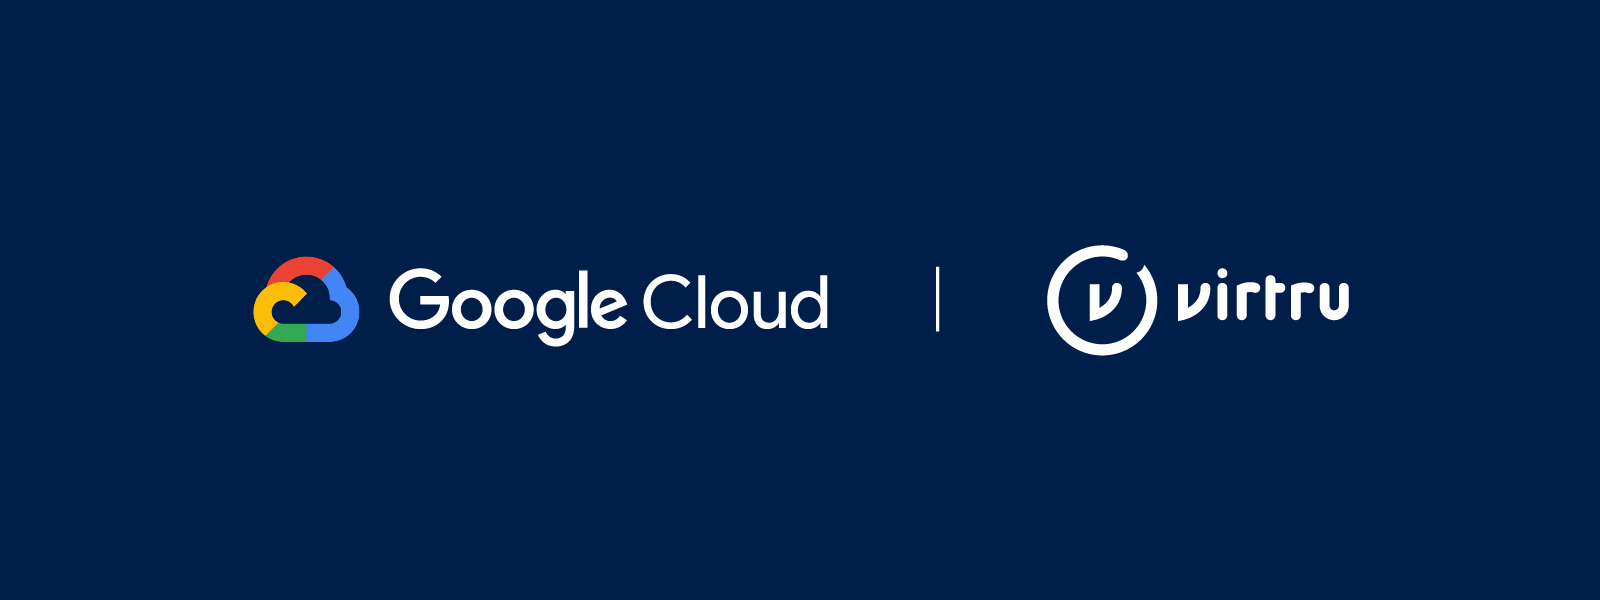 Virtru Expands Partnership with Google Cloud After Surpassing 3,500 Joint Customers